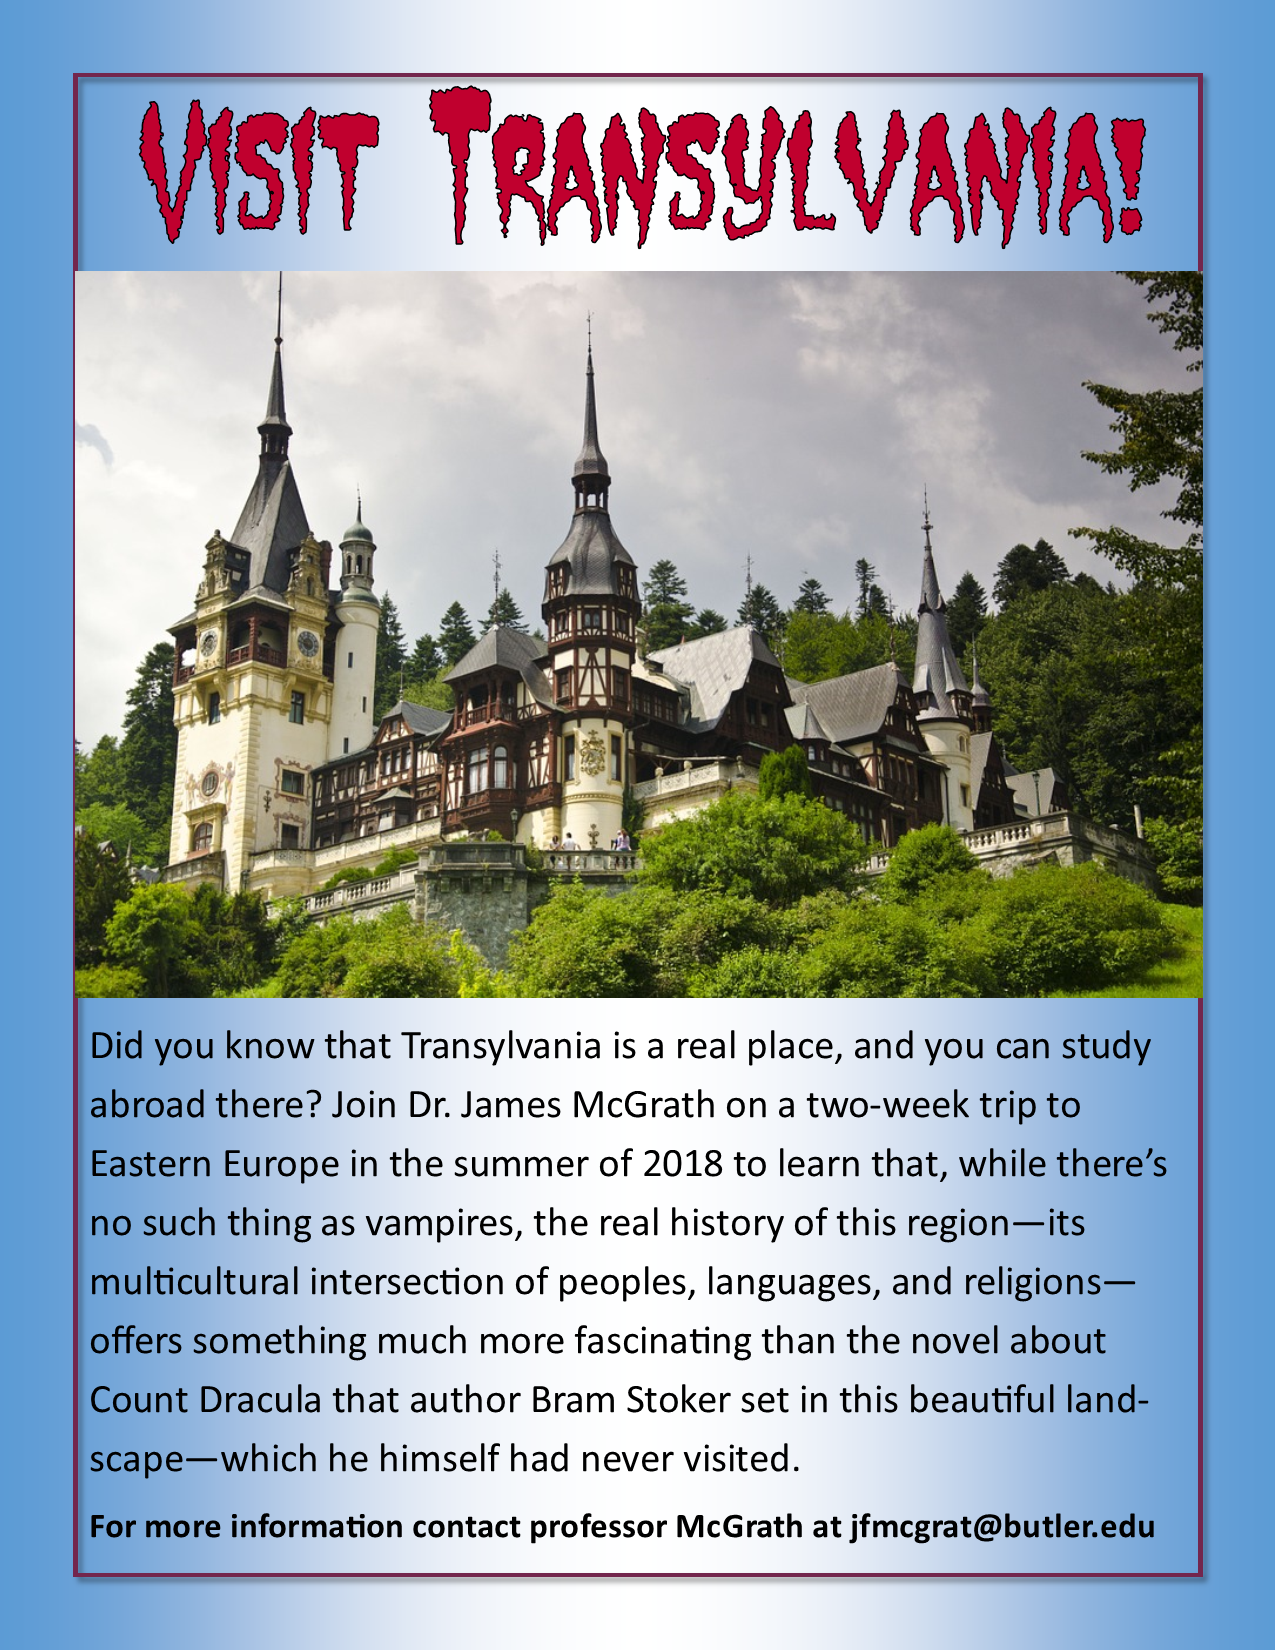 Transylvania poster 2 revised again